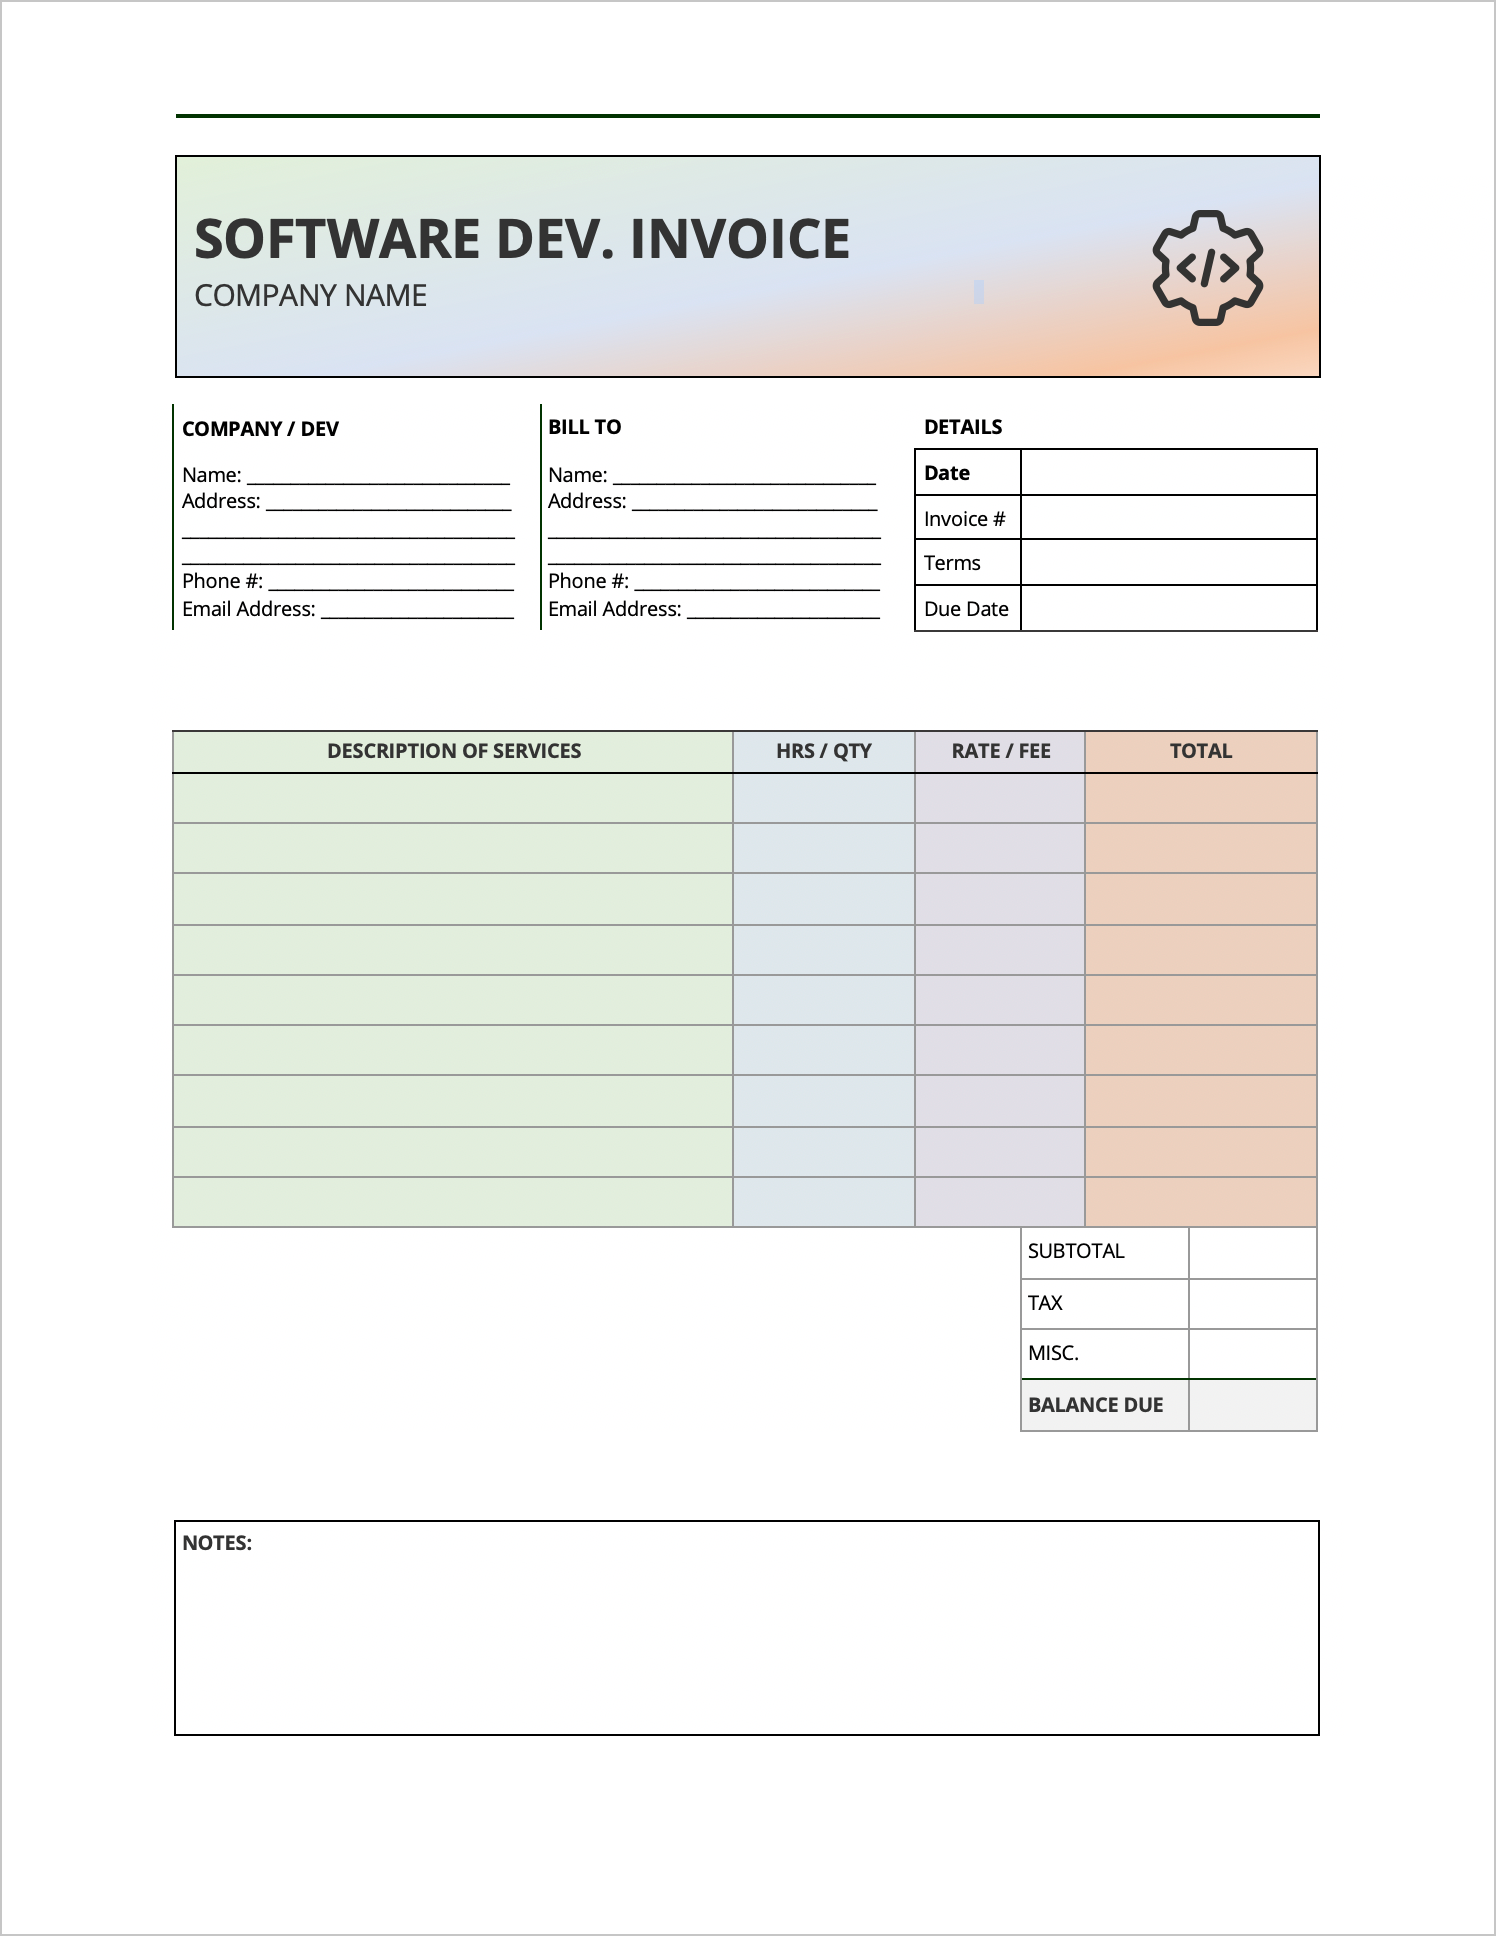 Free Software Development Invoice Template  PDF  WORD  EXCEL Throughout Software Development Invoice Template